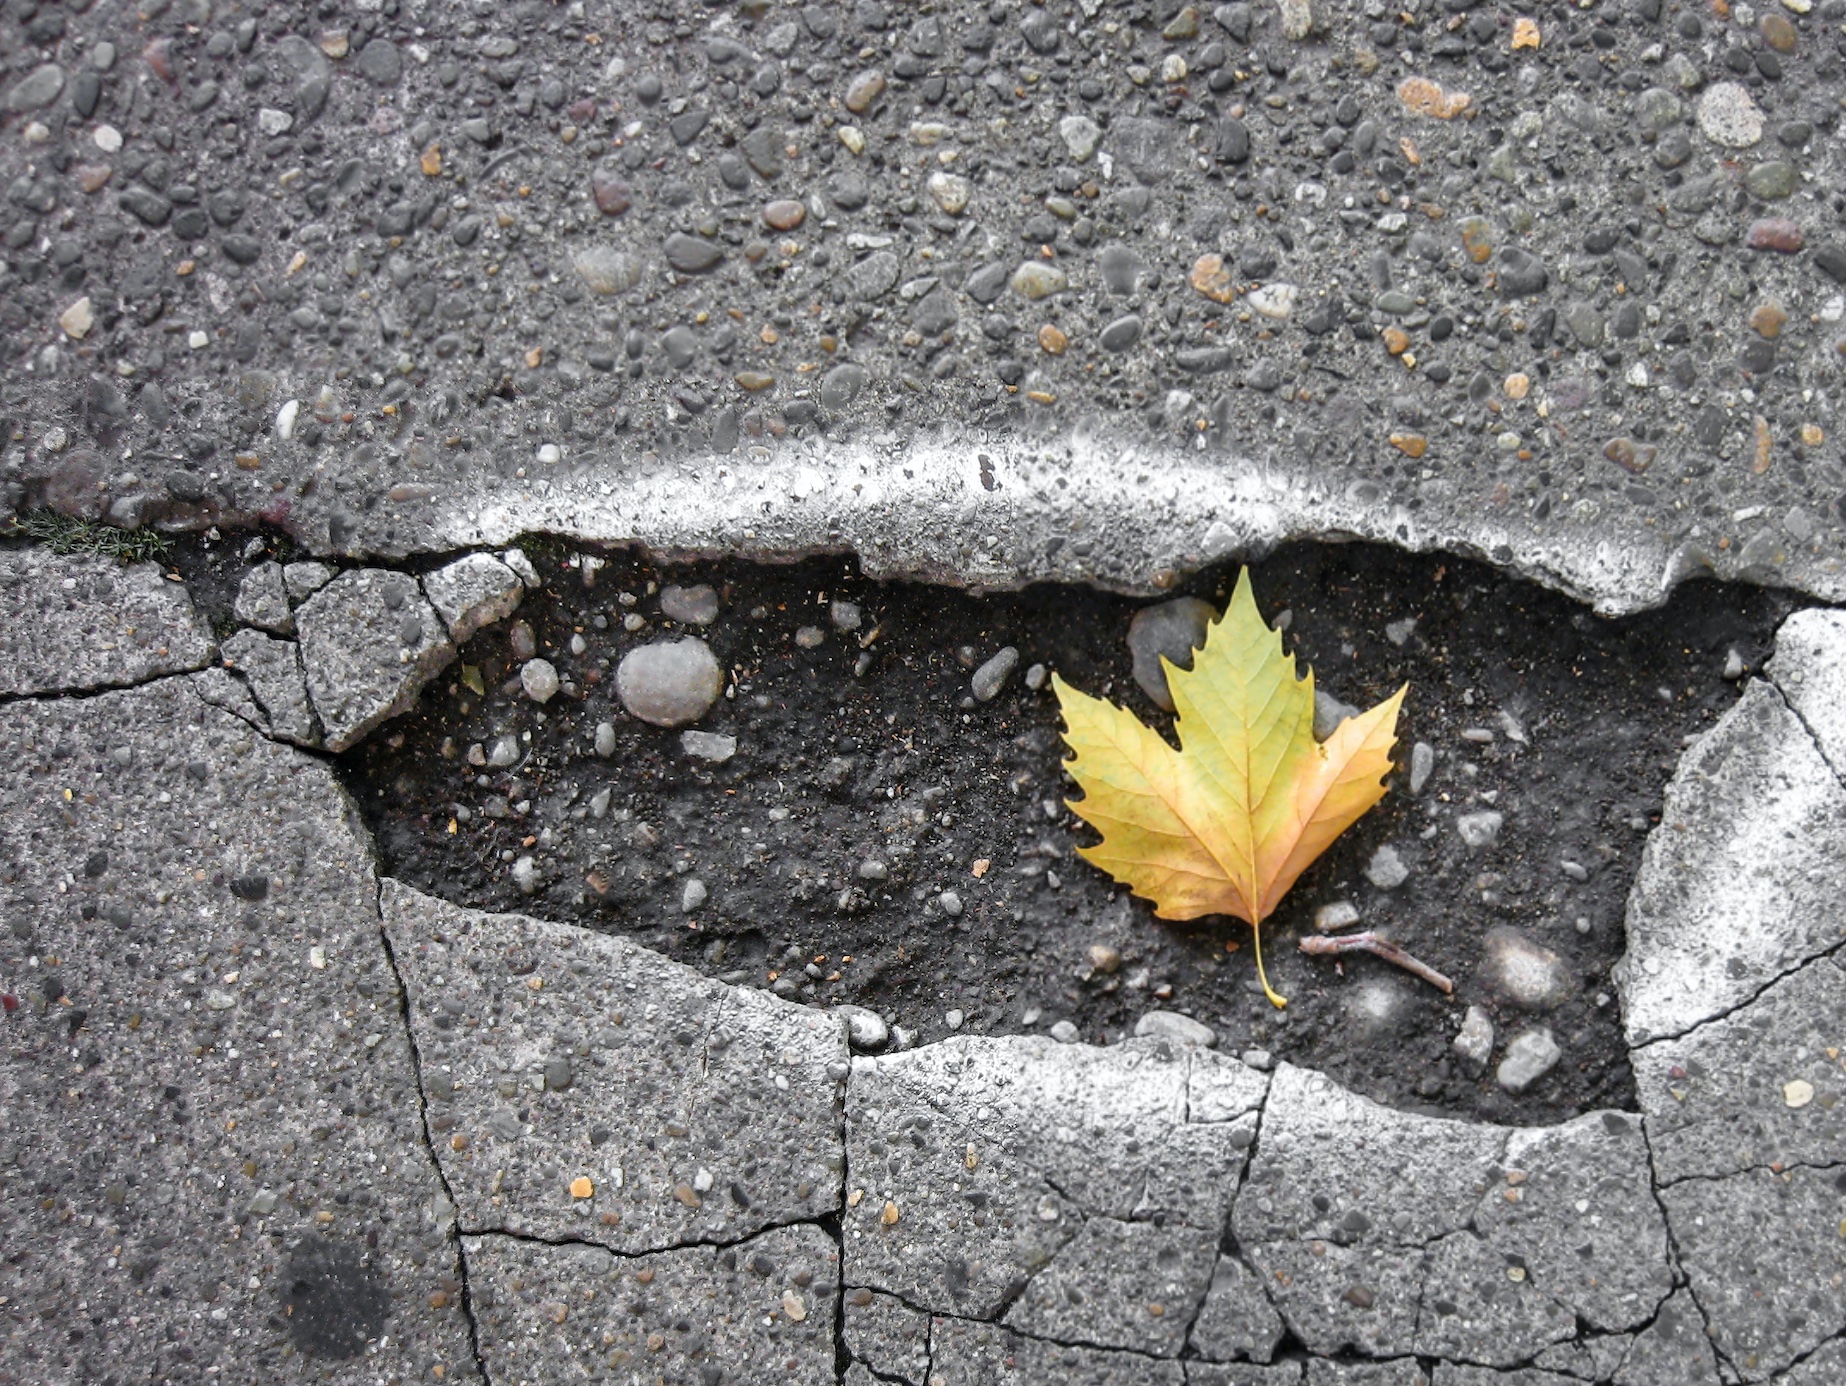 Yellow leaf in pothole; image by Ian Taylor, via Unsplash.com.